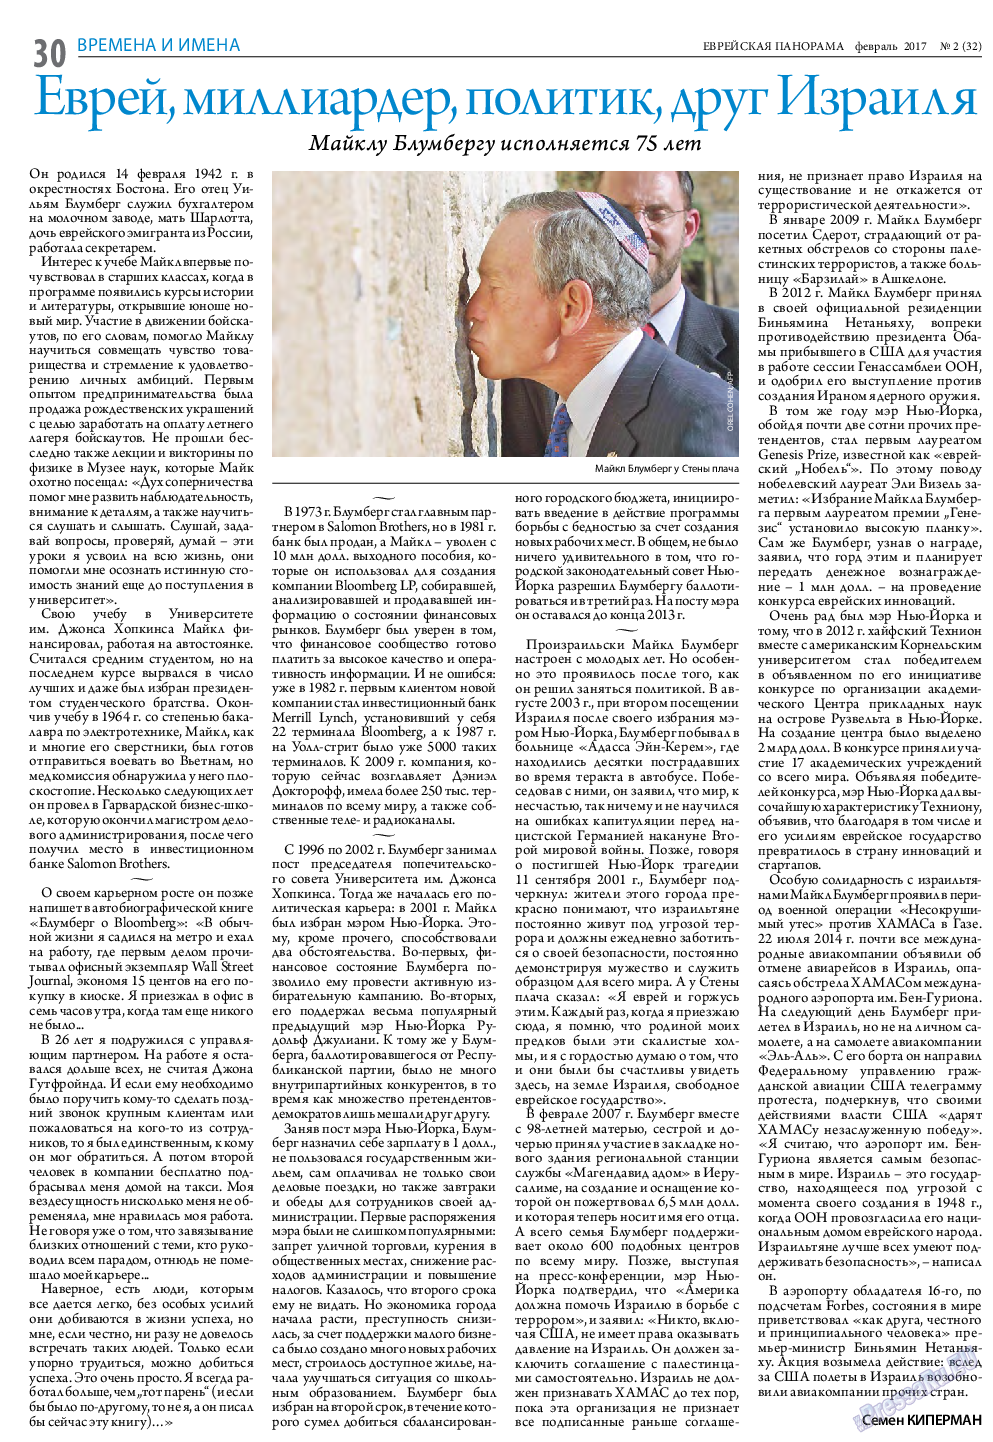 Еврейская панорама, газета. 2017 №2 стр.30